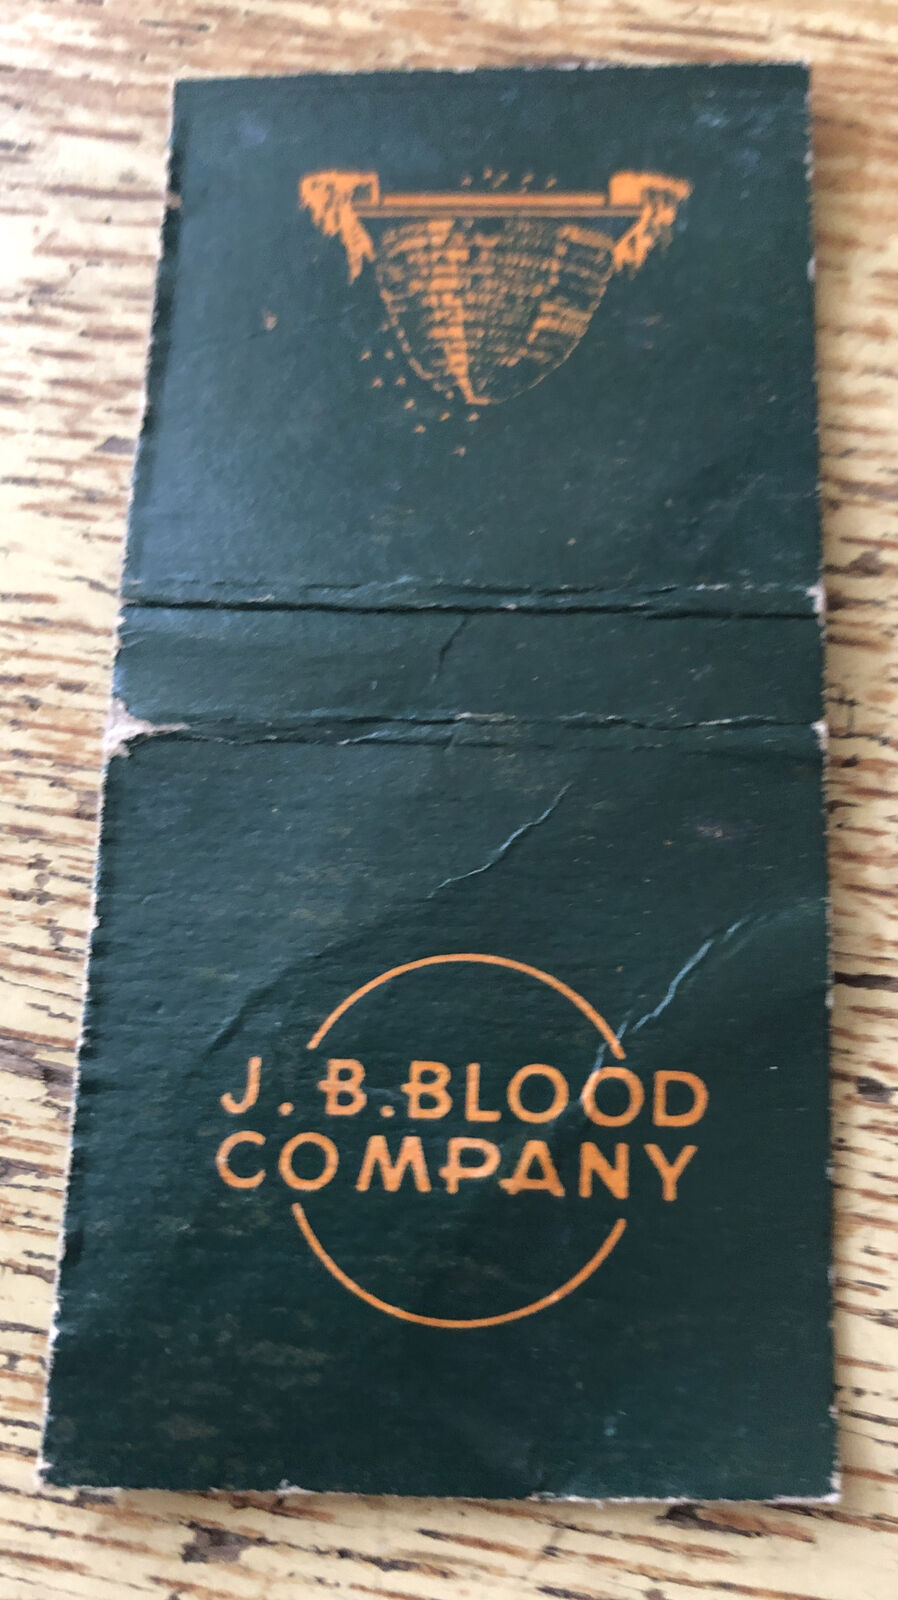 1930s-40s J.B. Blood Company Matchbook Cover